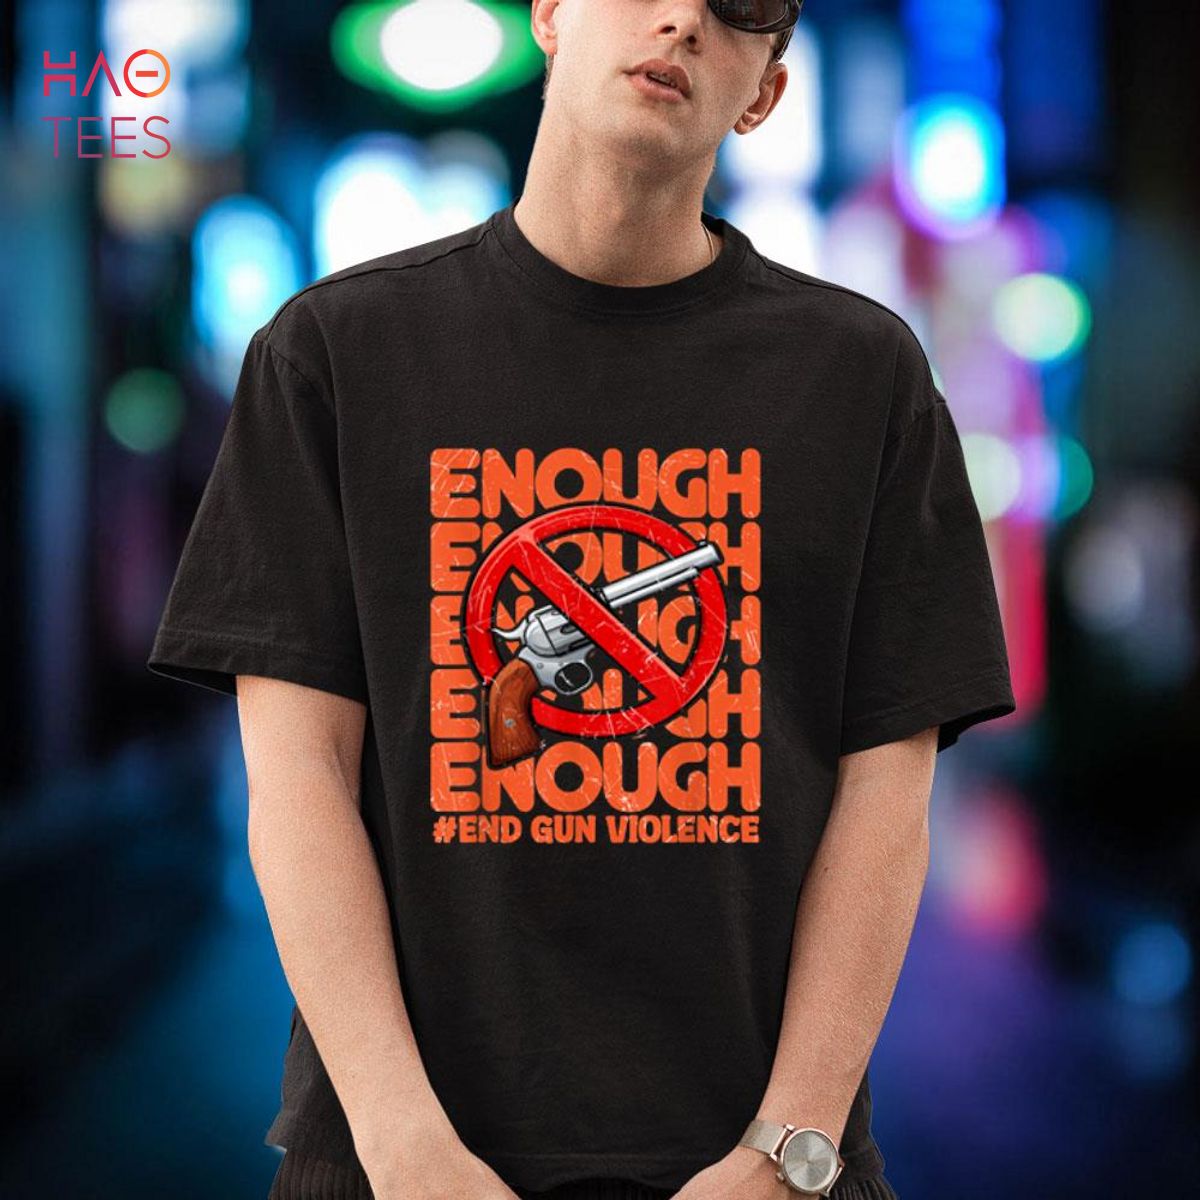 End gun violence control safe kids Shirt